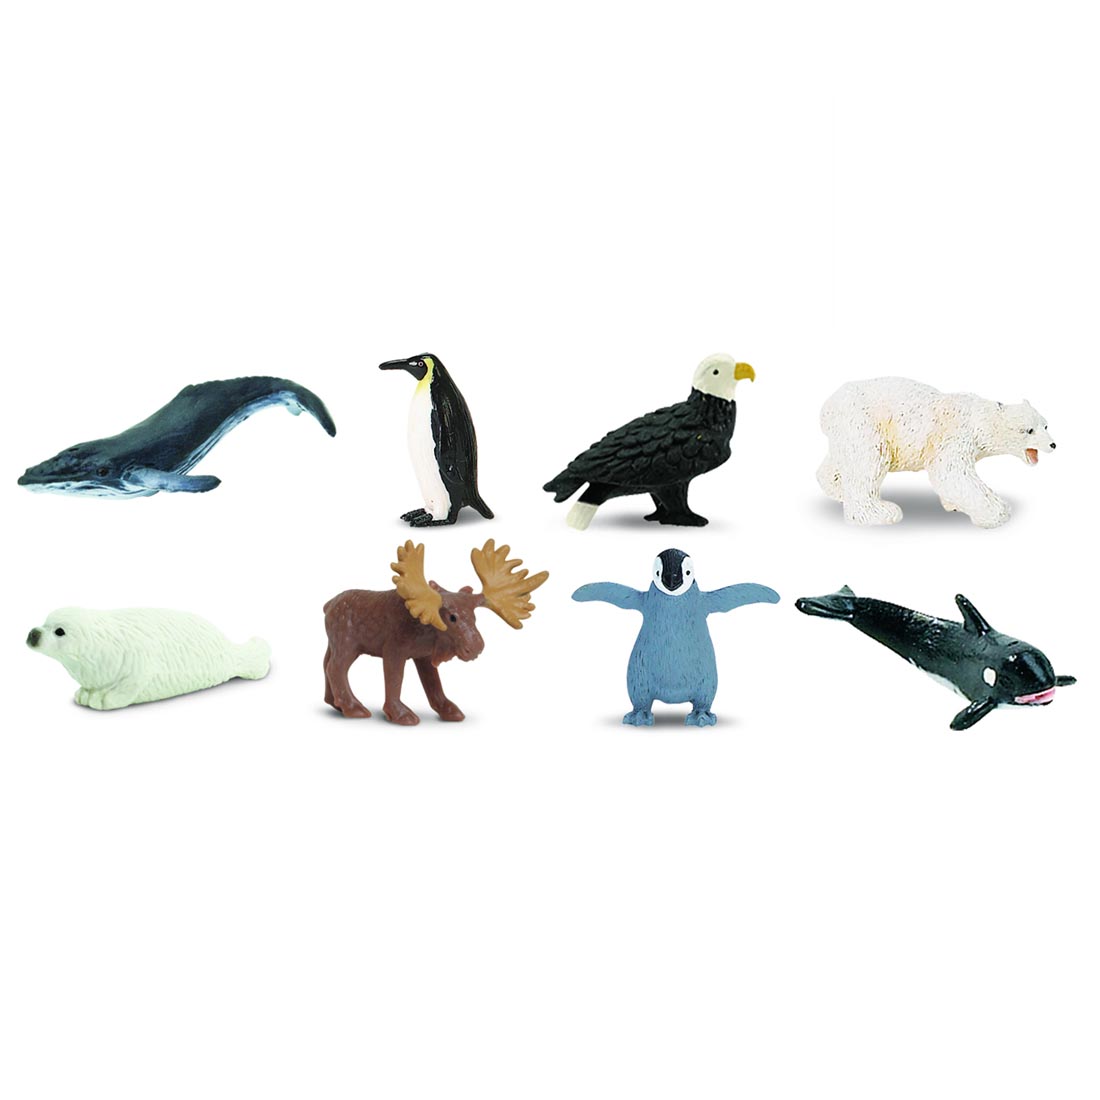 Arctic Animal Mini Figurines include humpback whale, emperor penguin, bald eagle, polar bear, harp seal, moose, penguin chick and orca